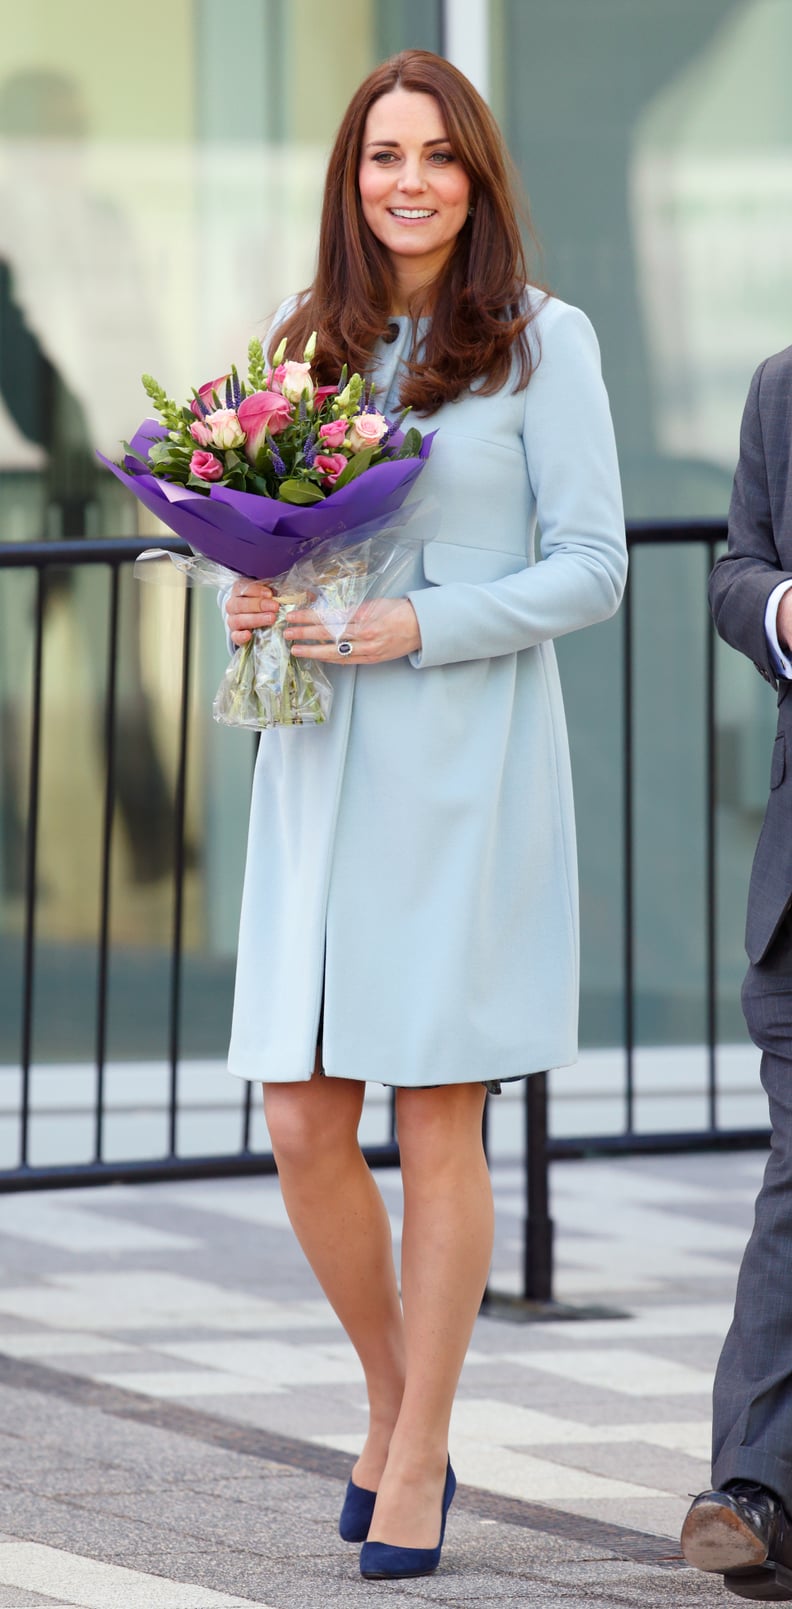 Kate Middleton at the Kensington Leisure Center in 2015